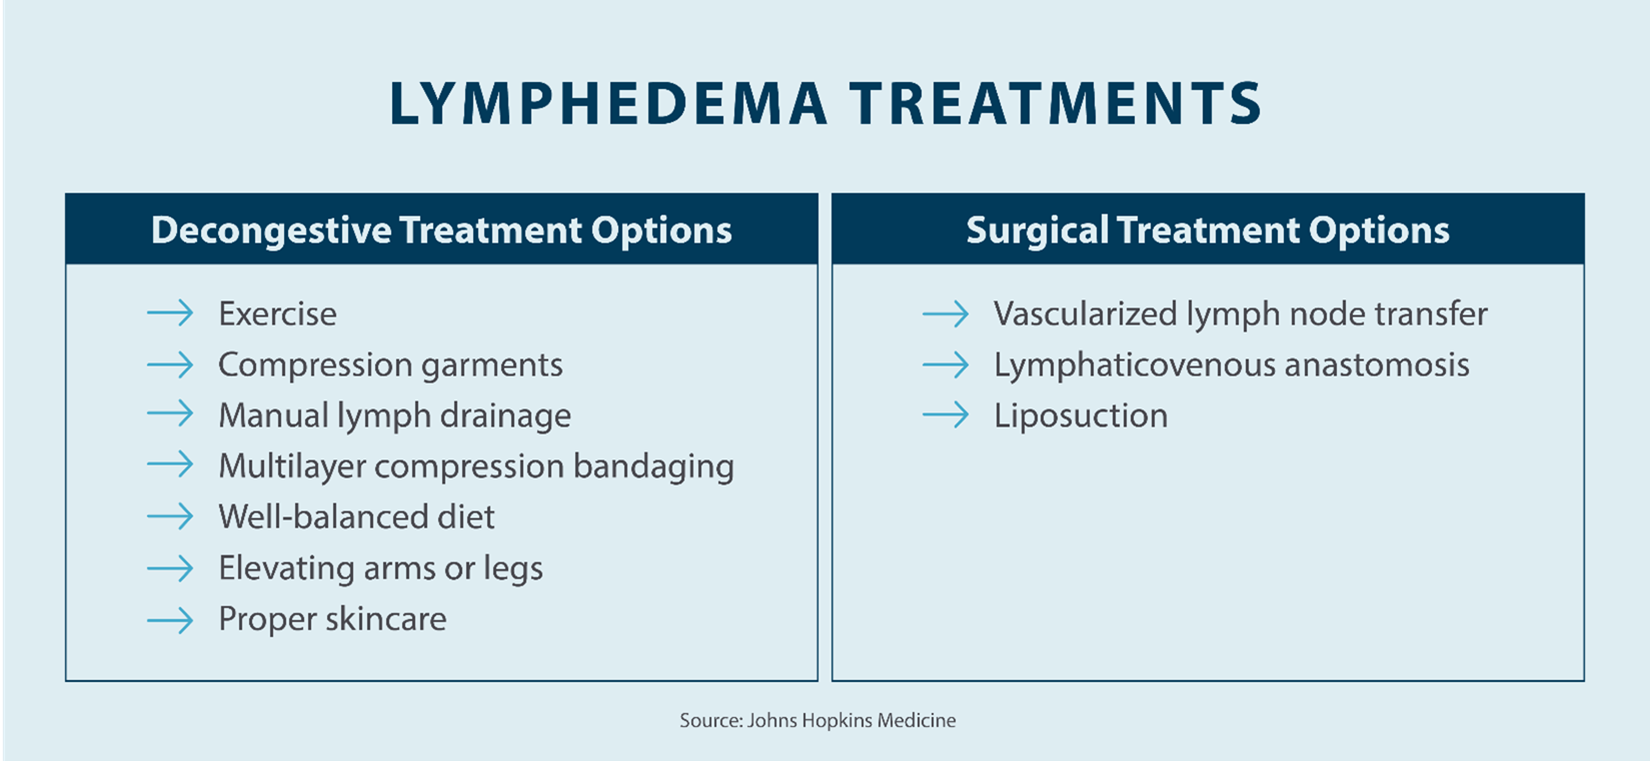 lymphedema treatments; decongestive treatment options and surgical treatment options Source John Hopkins Medicine